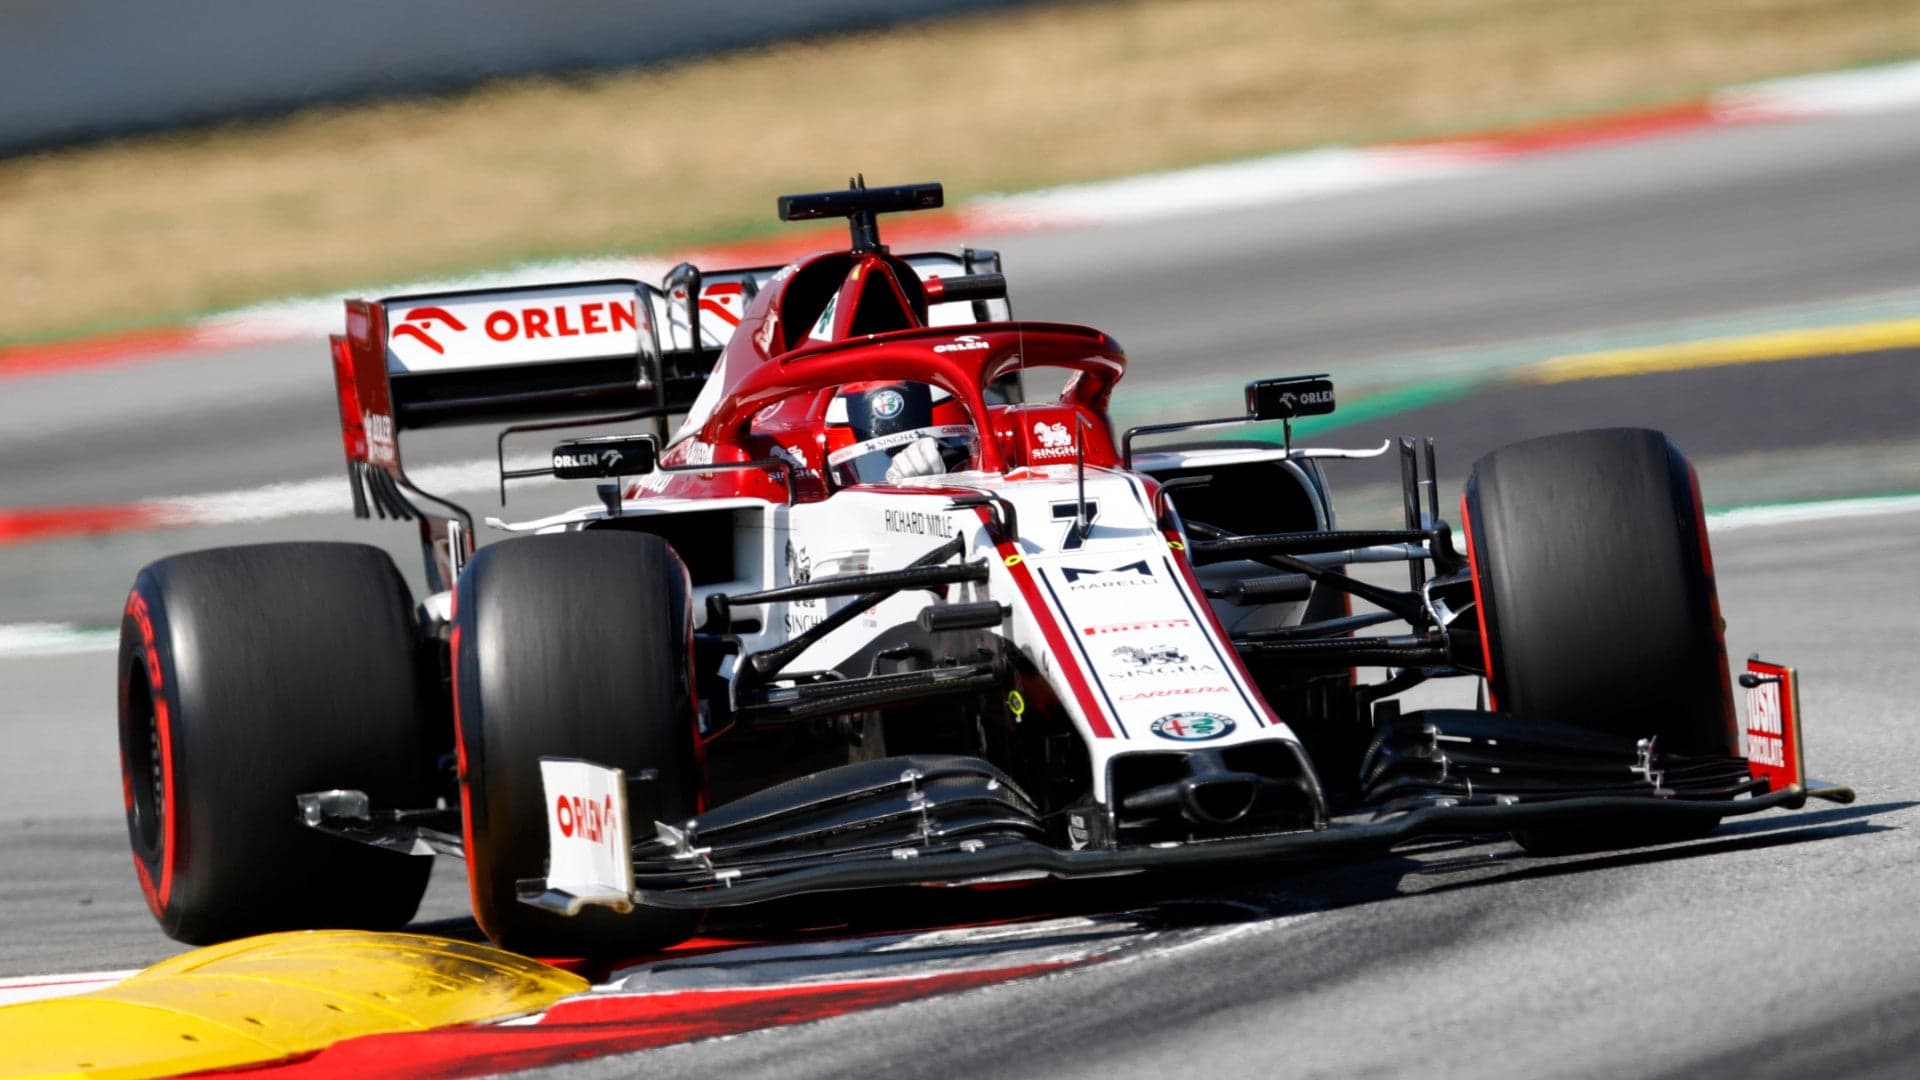 Kimi Raikkonen Has Driven Enough Race Miles in F1 to Circle the Planet Twice